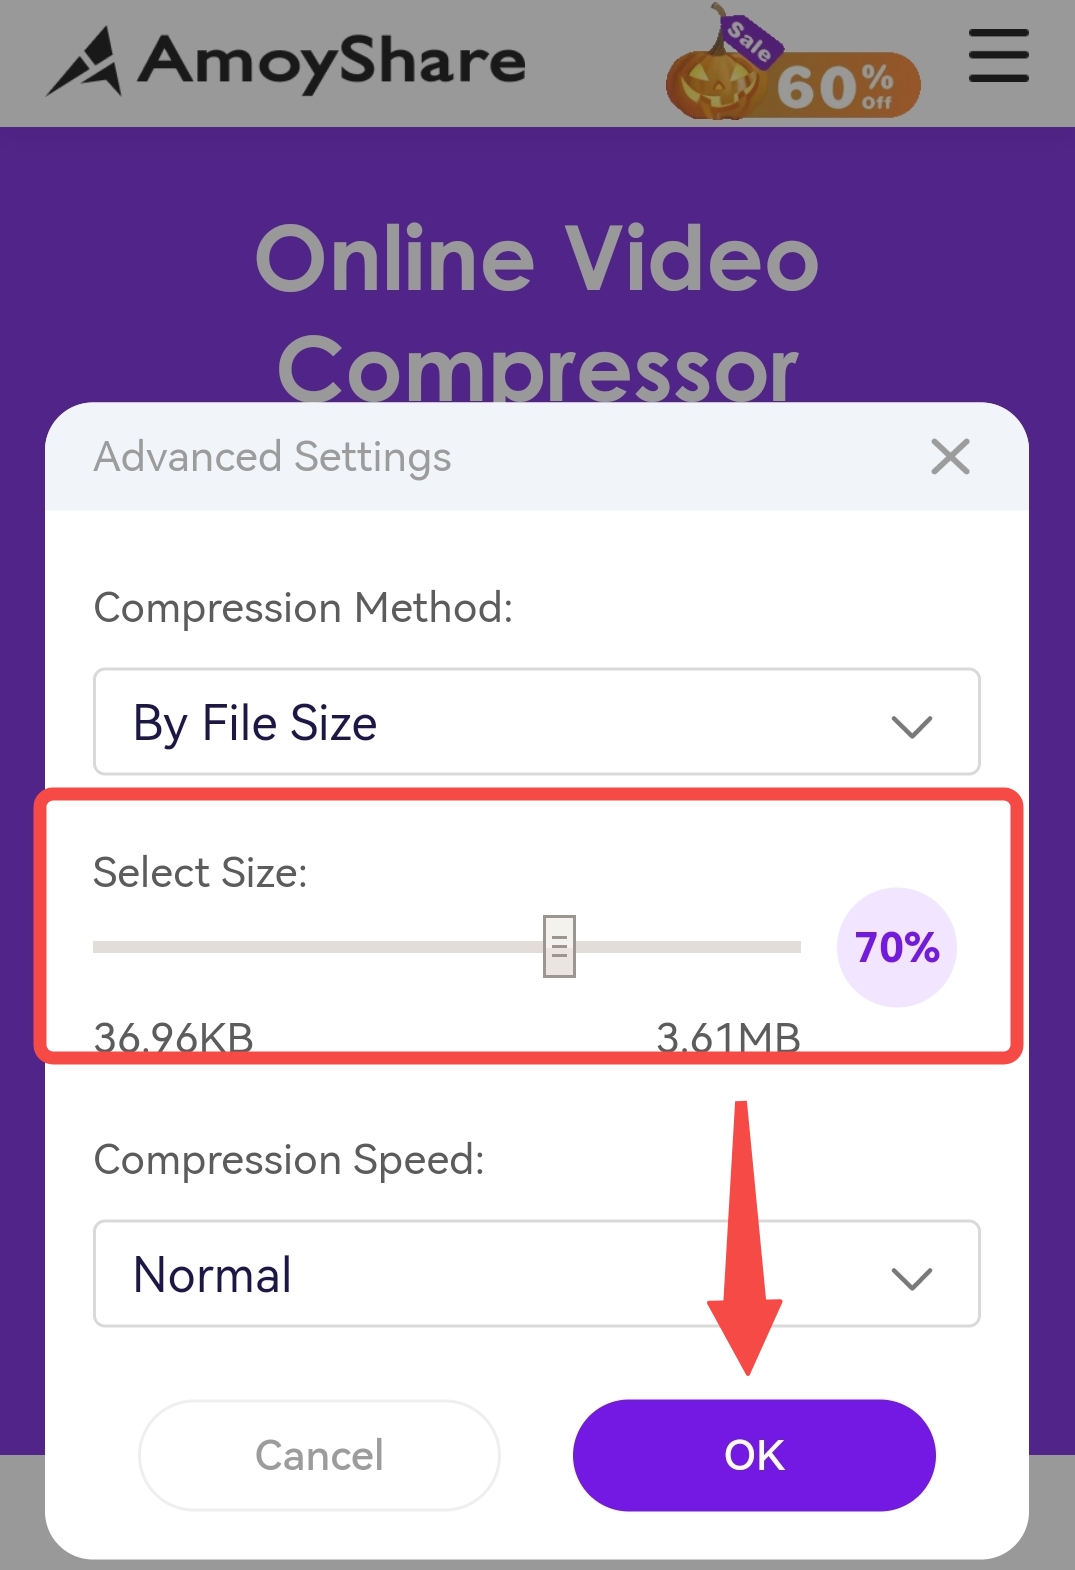 Save the compression settings on the AmoyShare Compressor